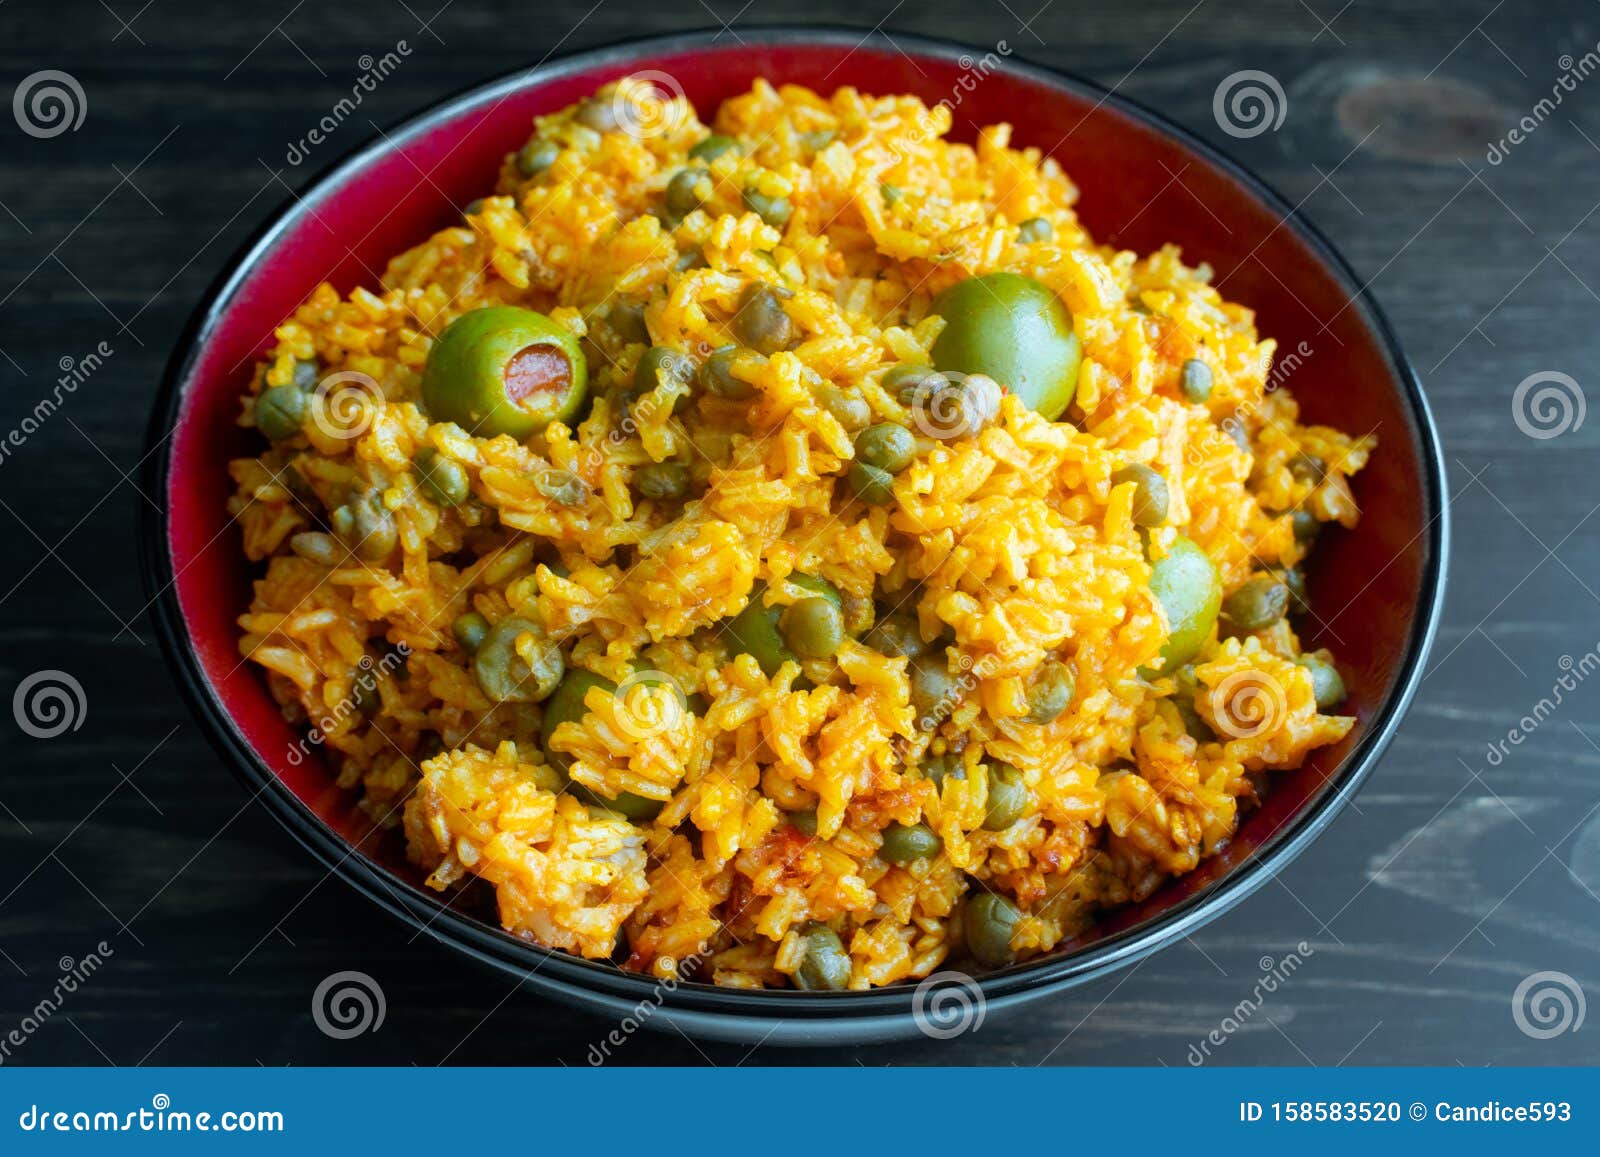 bowl of arroz con gandules